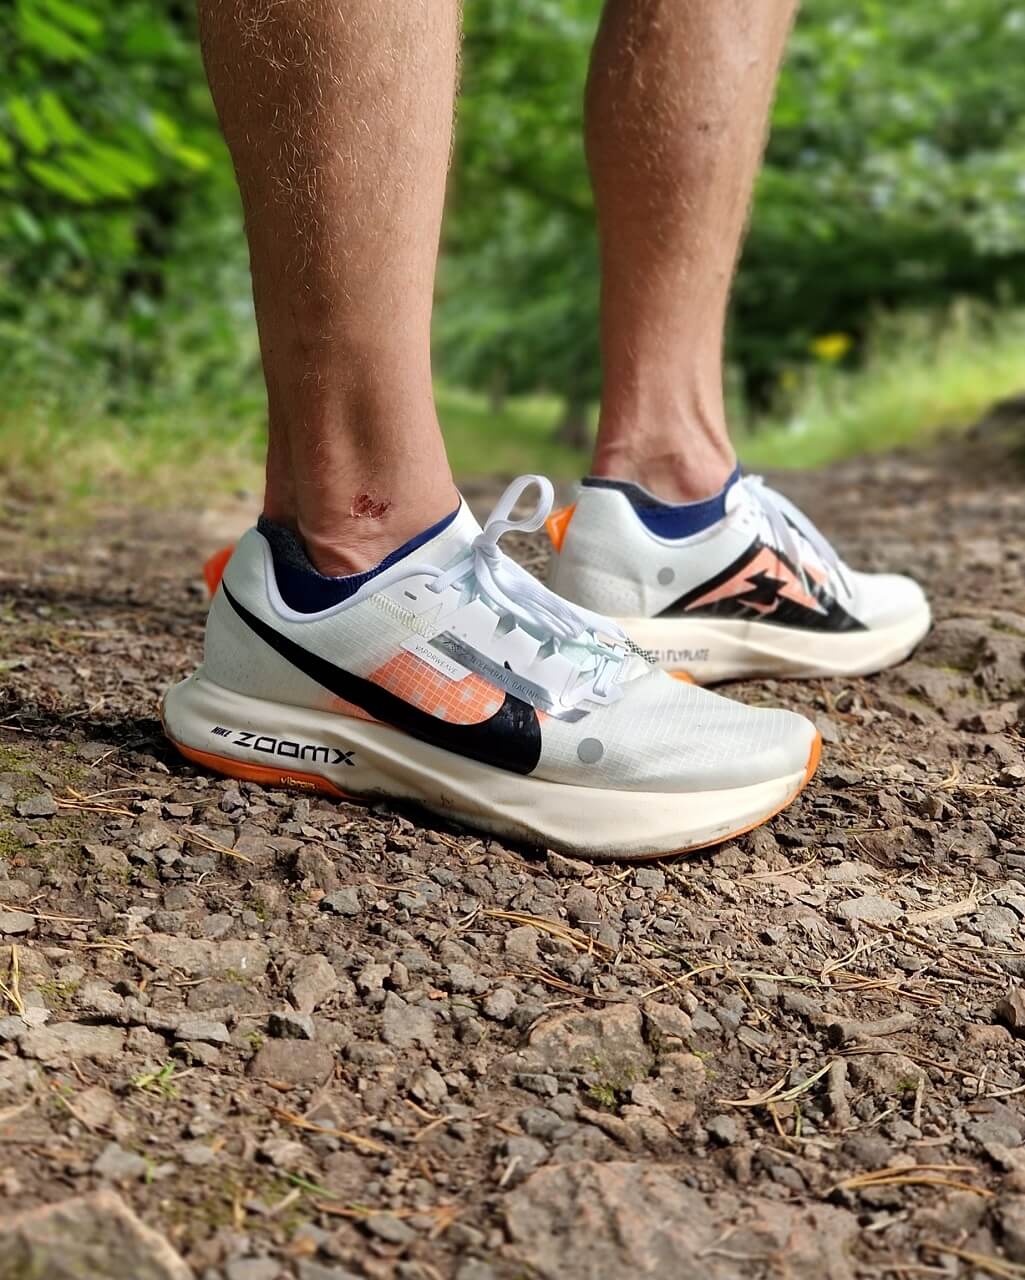 Runner standing on a gravel trail in white Nike running shoes